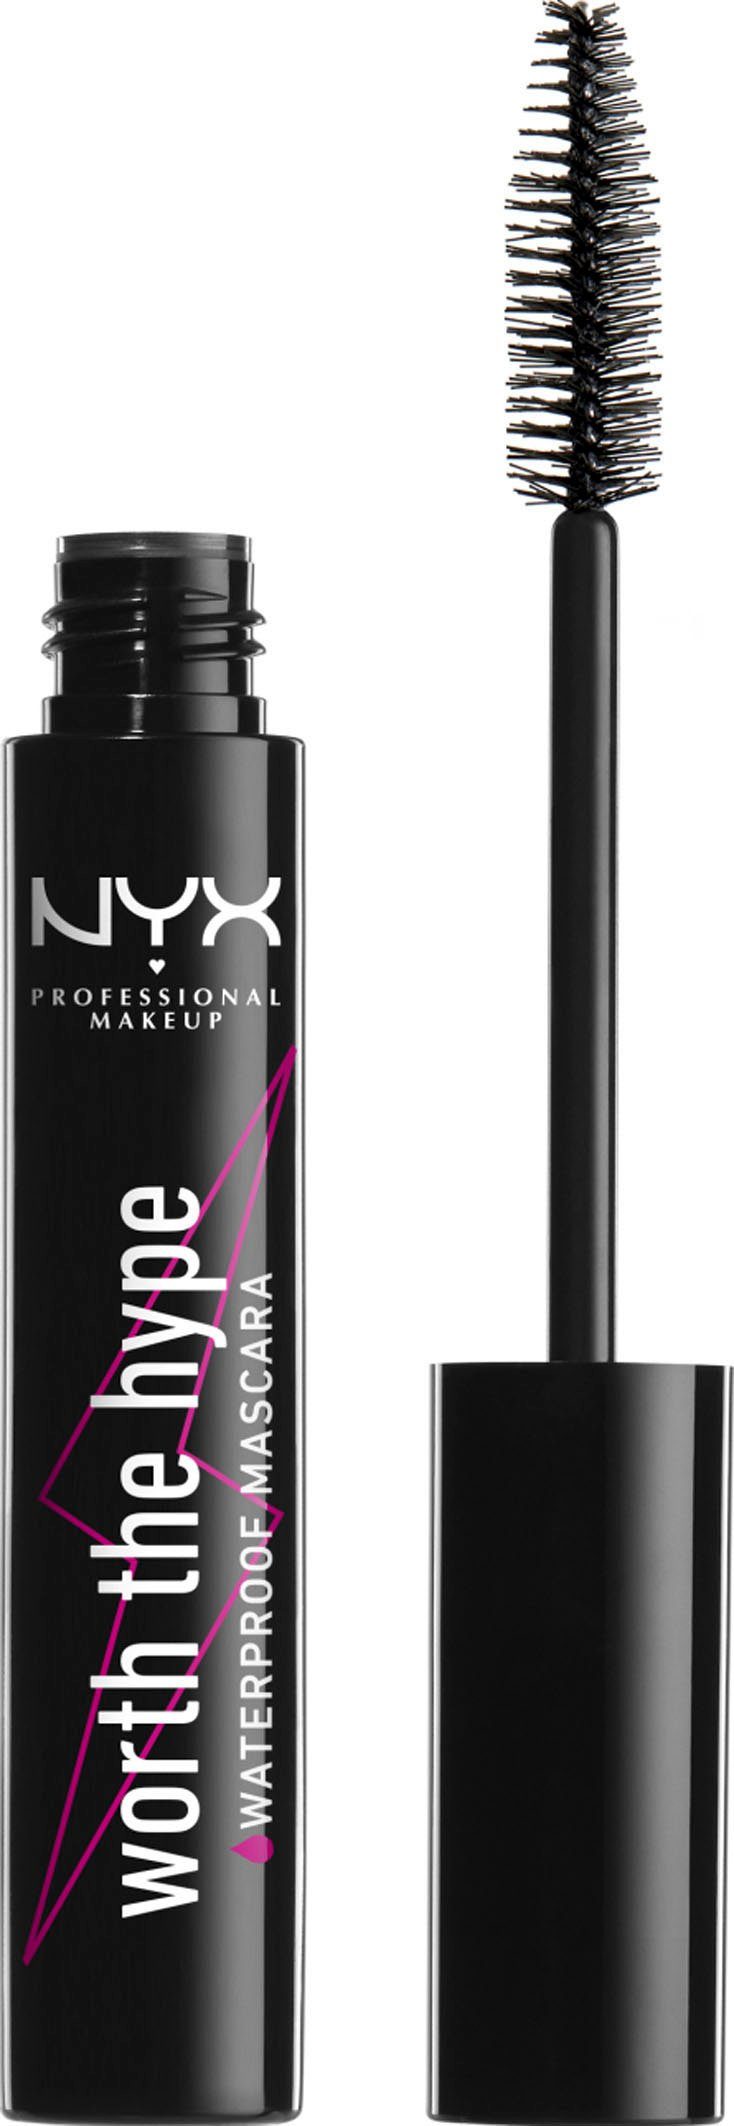 NYX Mascara Professional Hype Worth Mascara Waterproof The Makeup